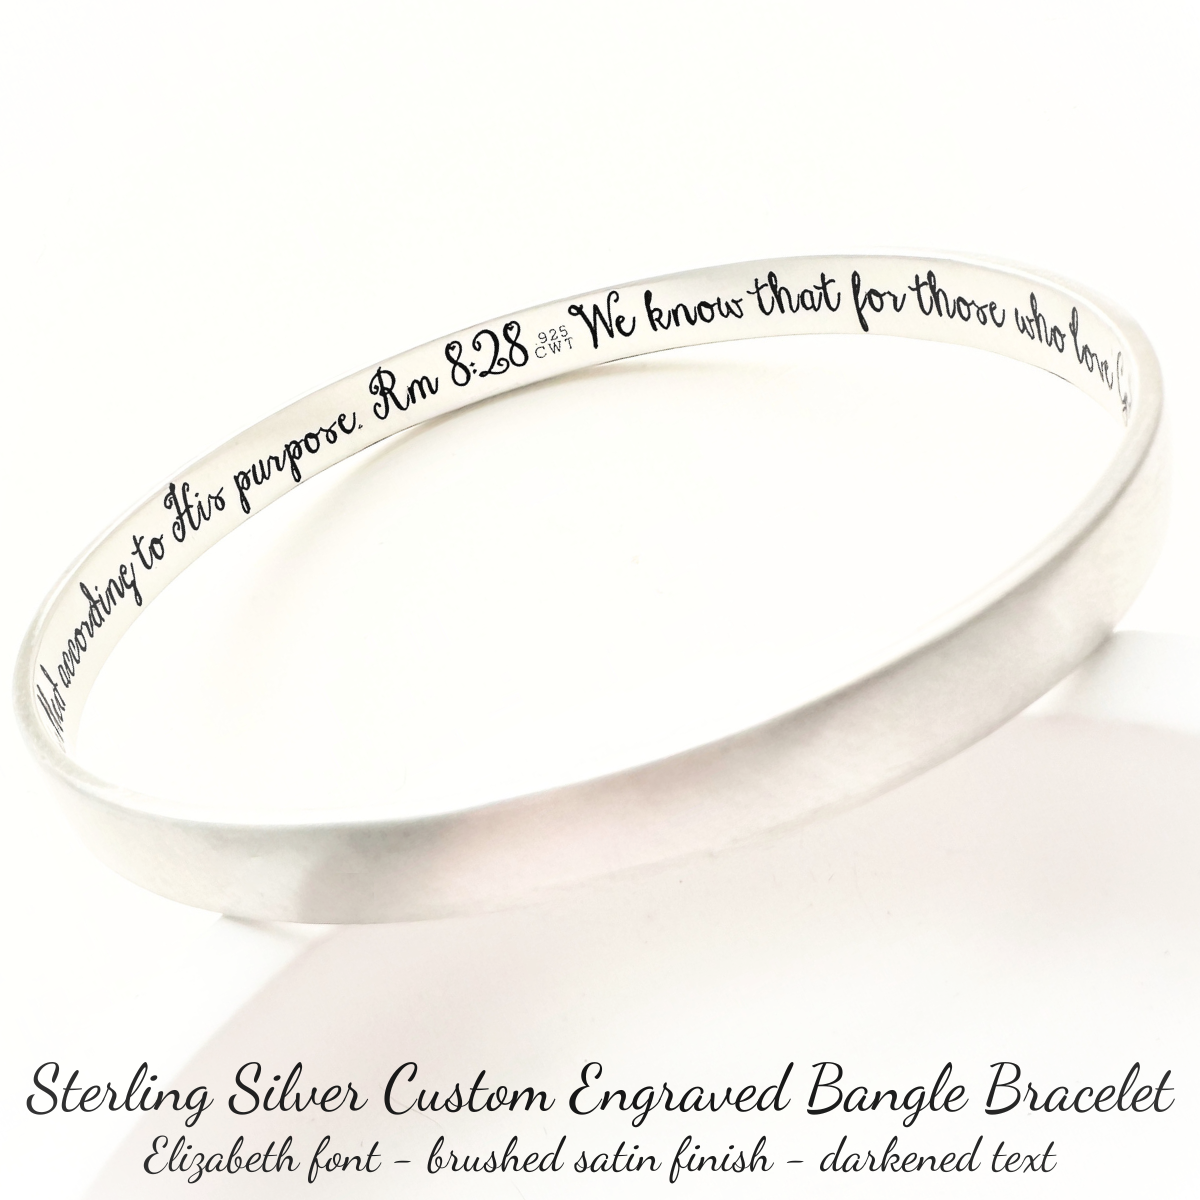 Sterling Silver Personalized Monogram Bangle Bracelet. 7